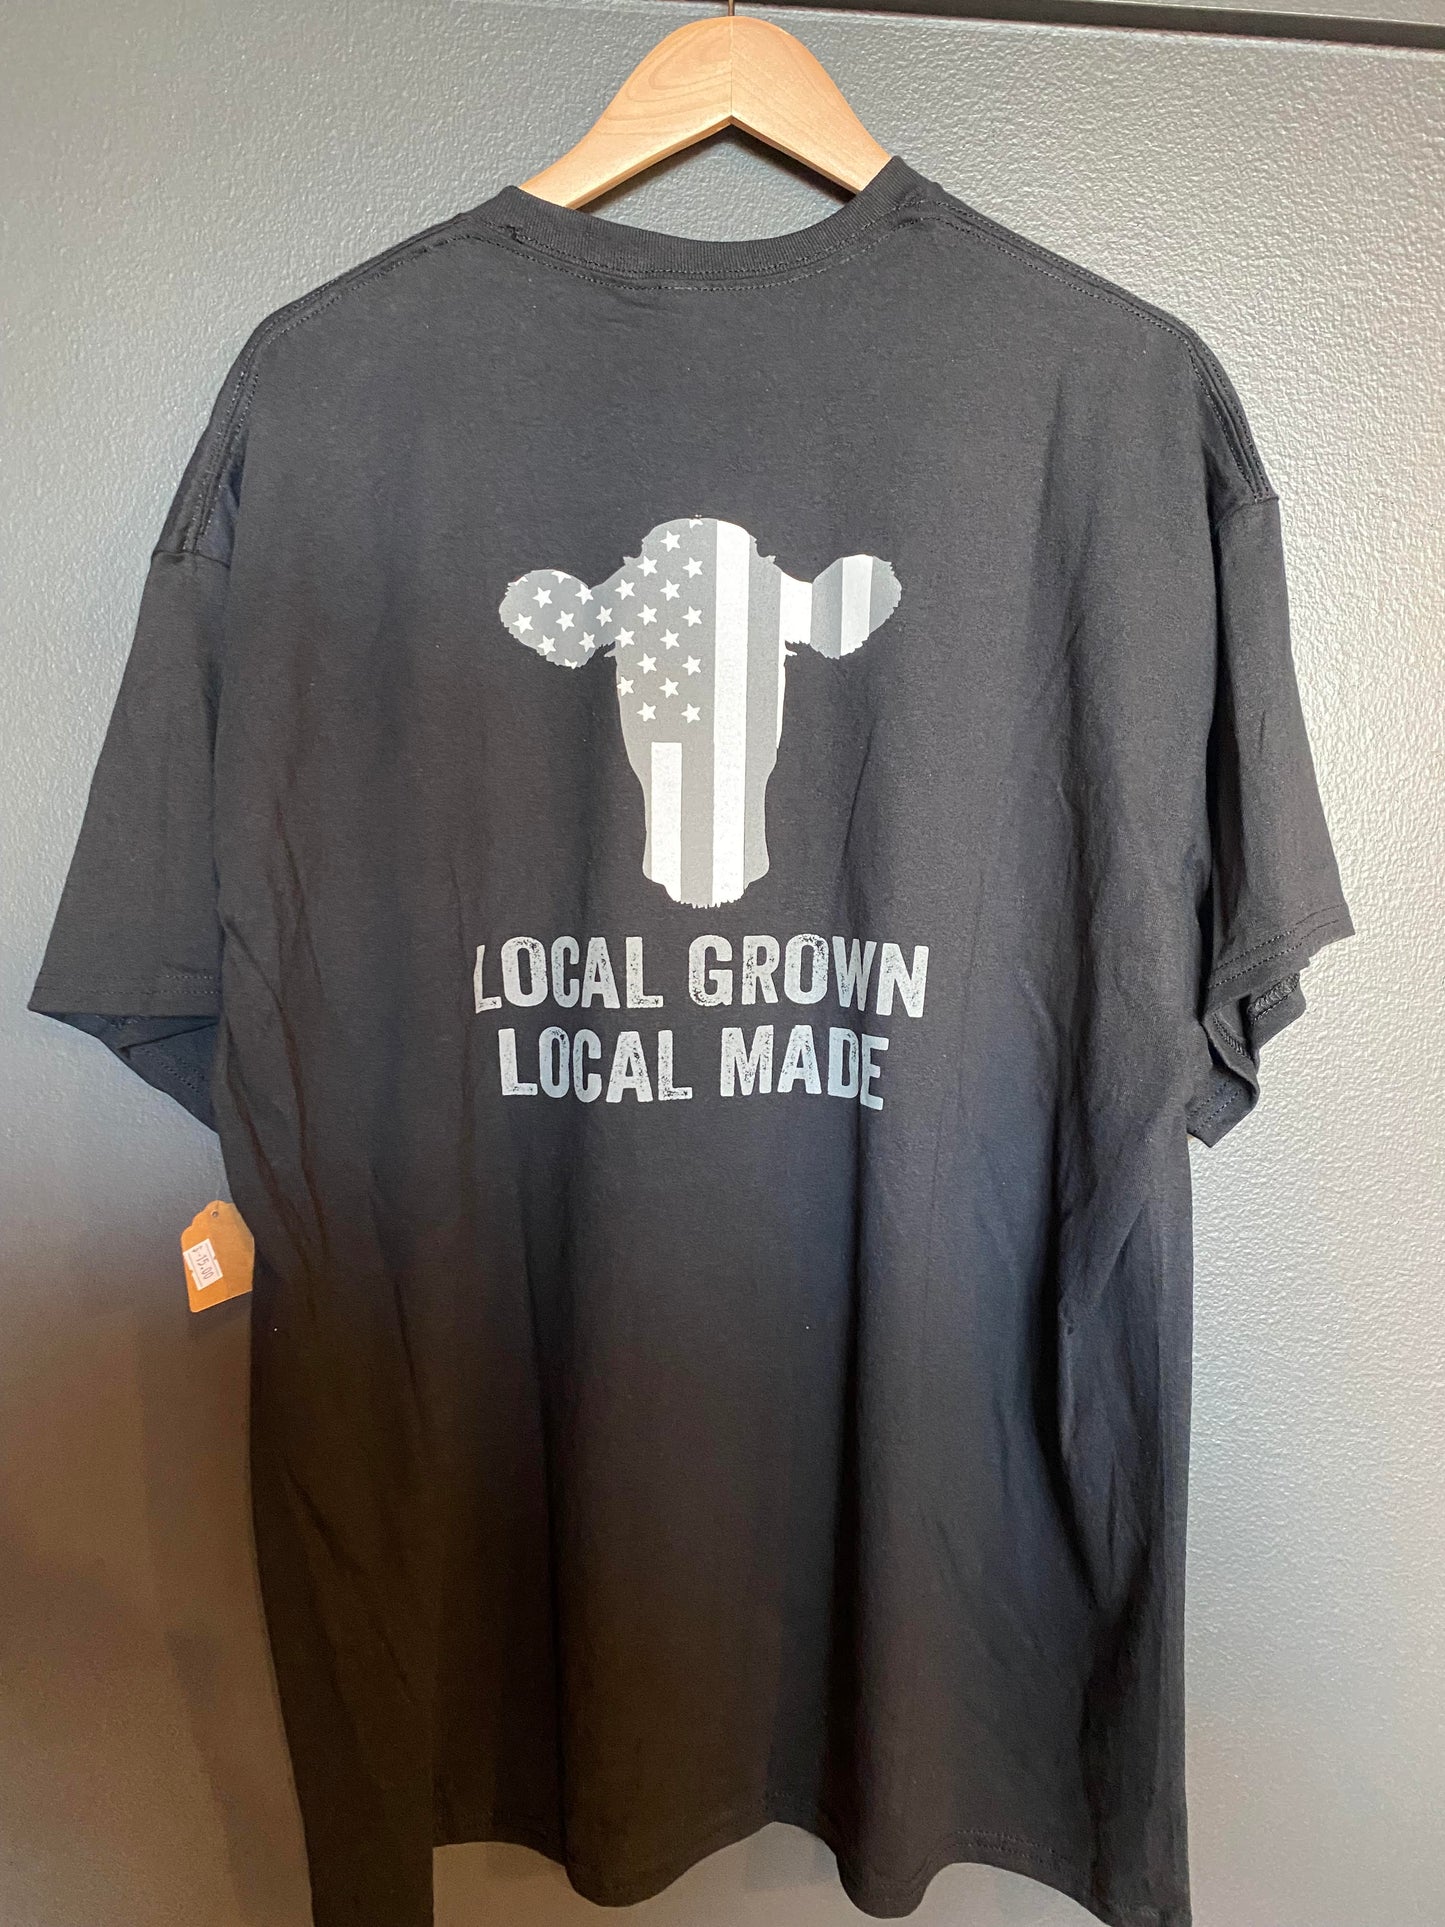 Harts local/Local grown T-shirt